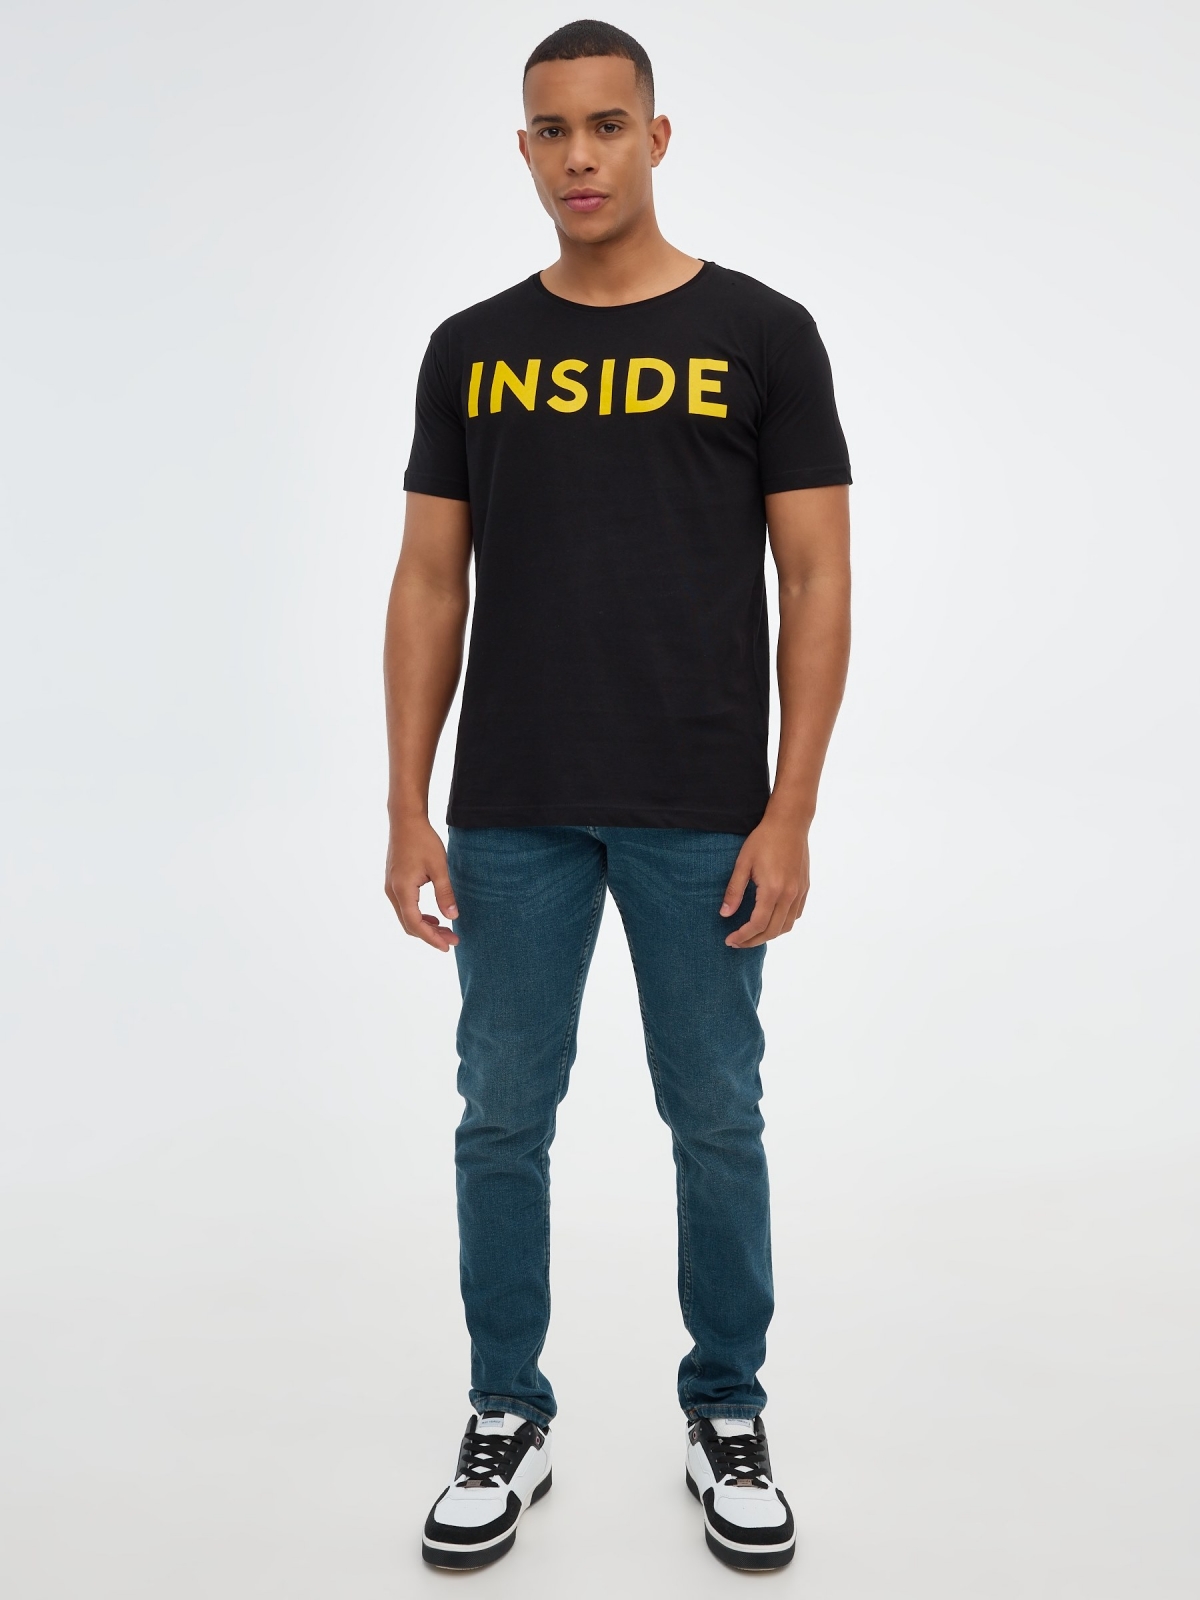 INSIDE basic T-shirt black front view